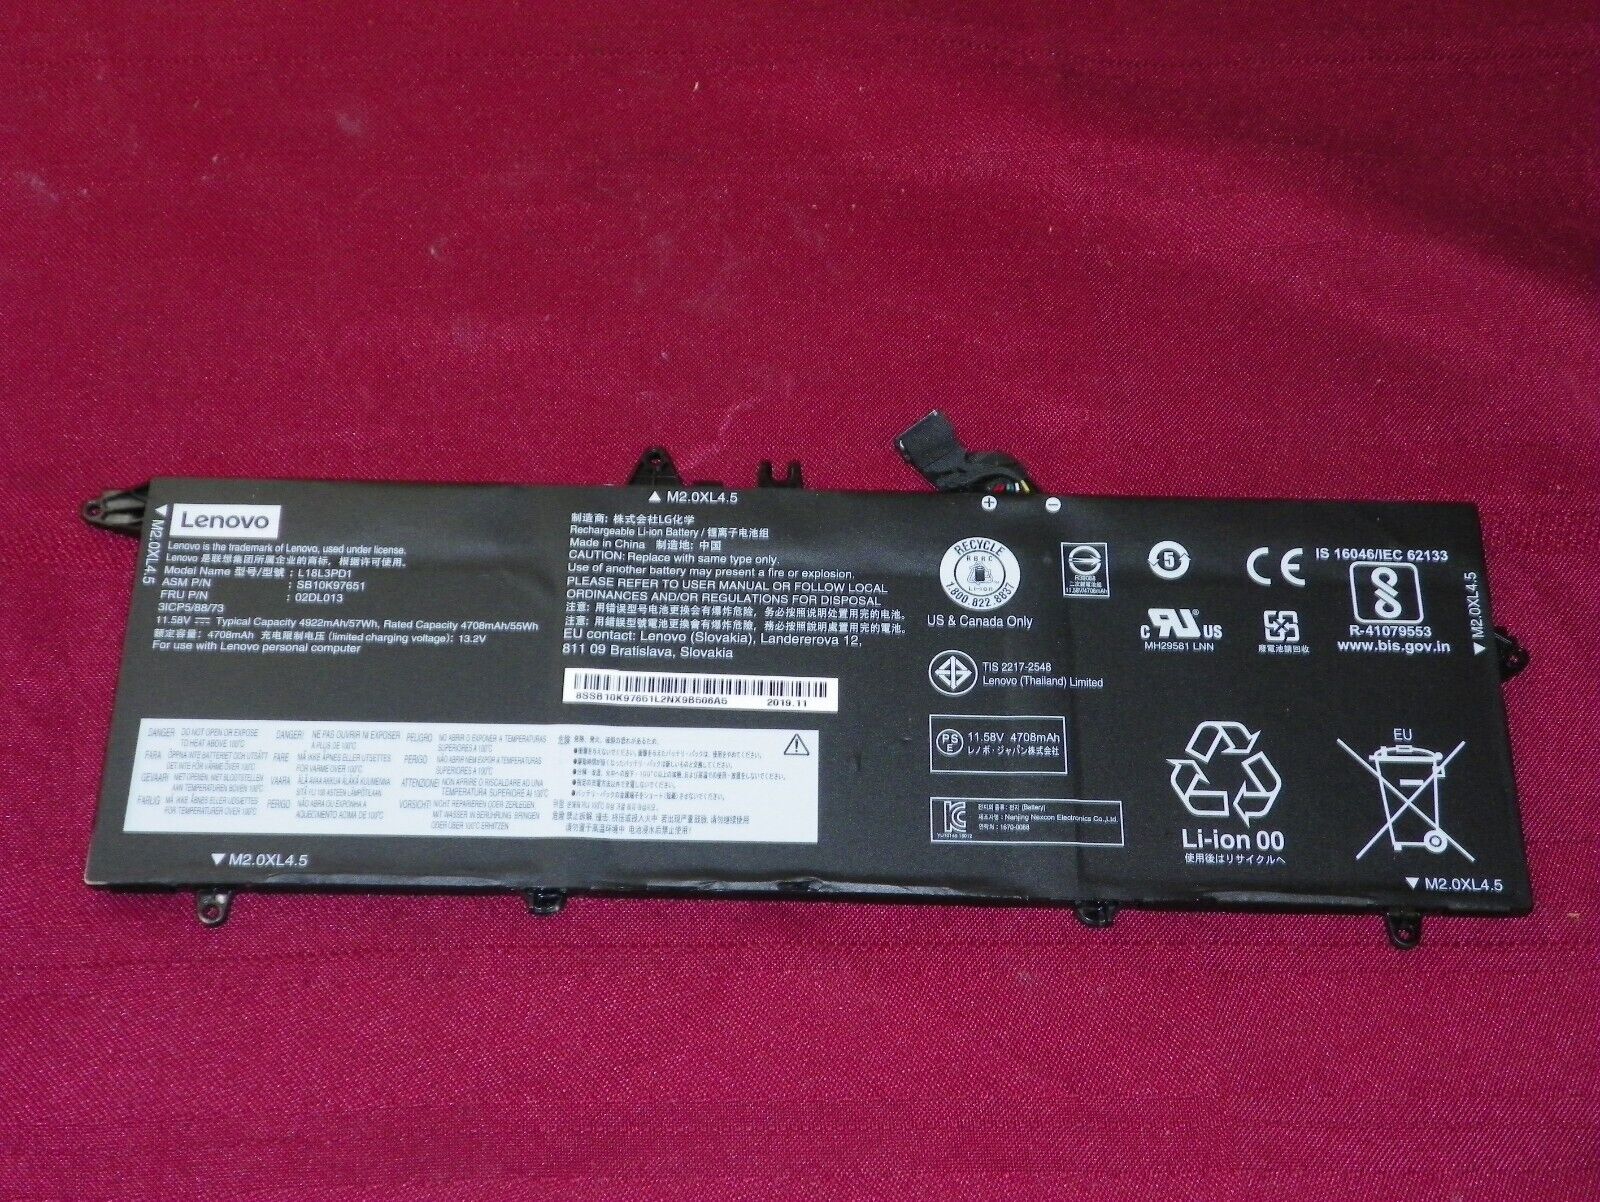 Genuine OEM Lenovo ThinkPad T490s 55Wh Battery - Model L18L3PD1 FRU 02DL013